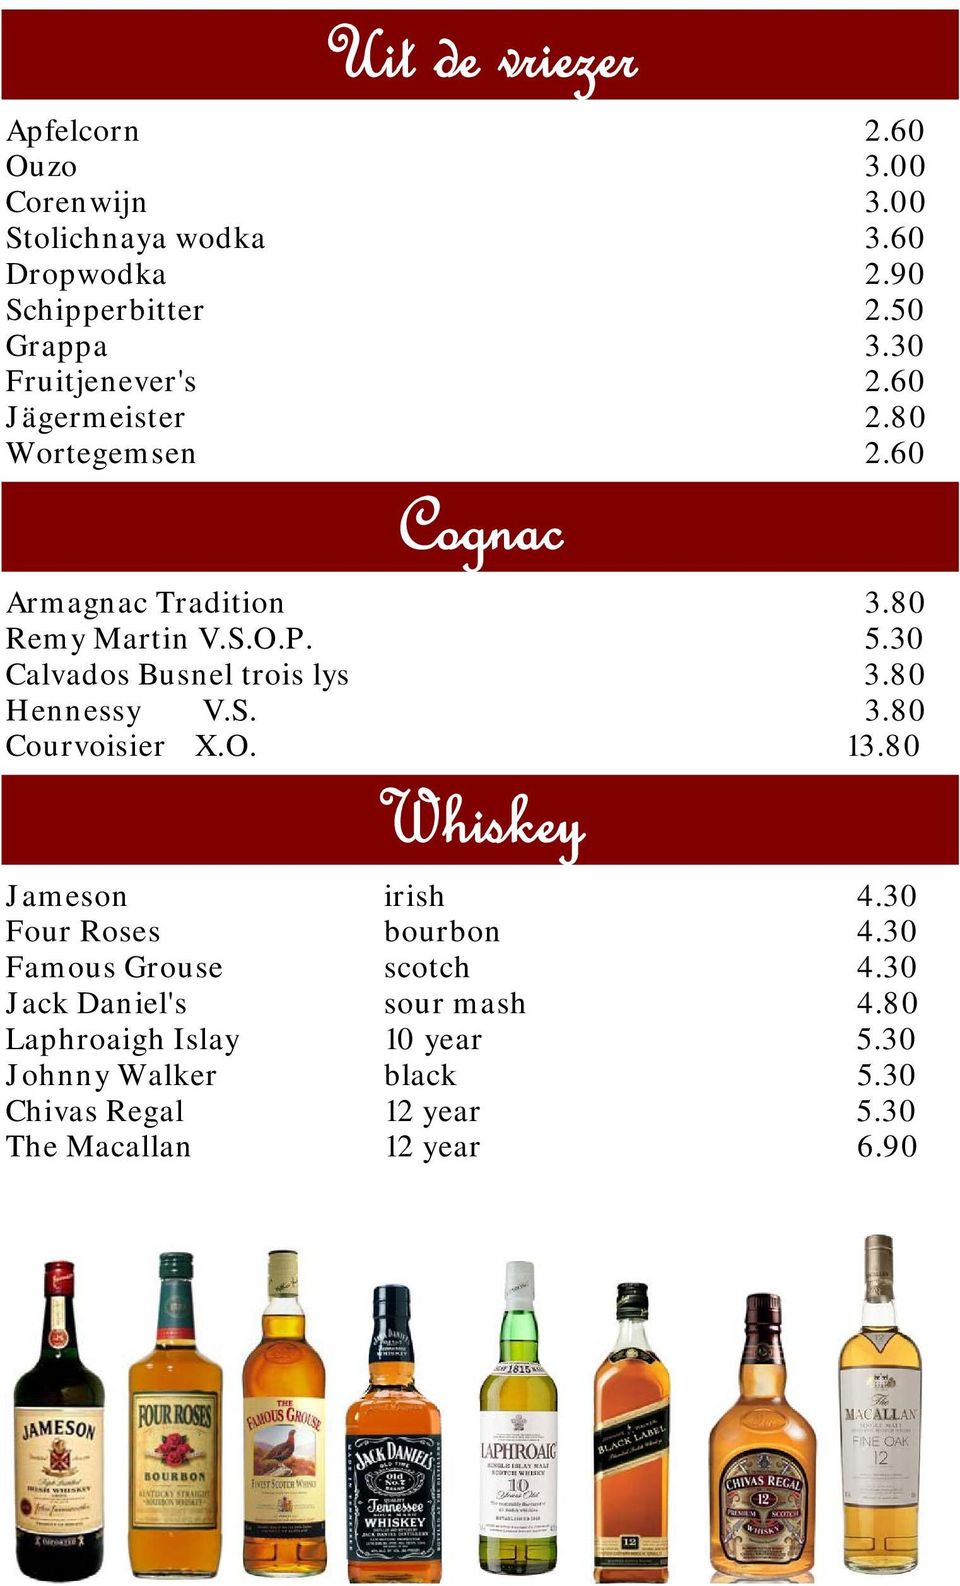 30 Calvados Busnel trois lys 3.80 Hennessy V.S. 3.80 Courvoisier X.O. 13.80 Whiskey Jameson irish 4.30 Four Roses bourbon 4.